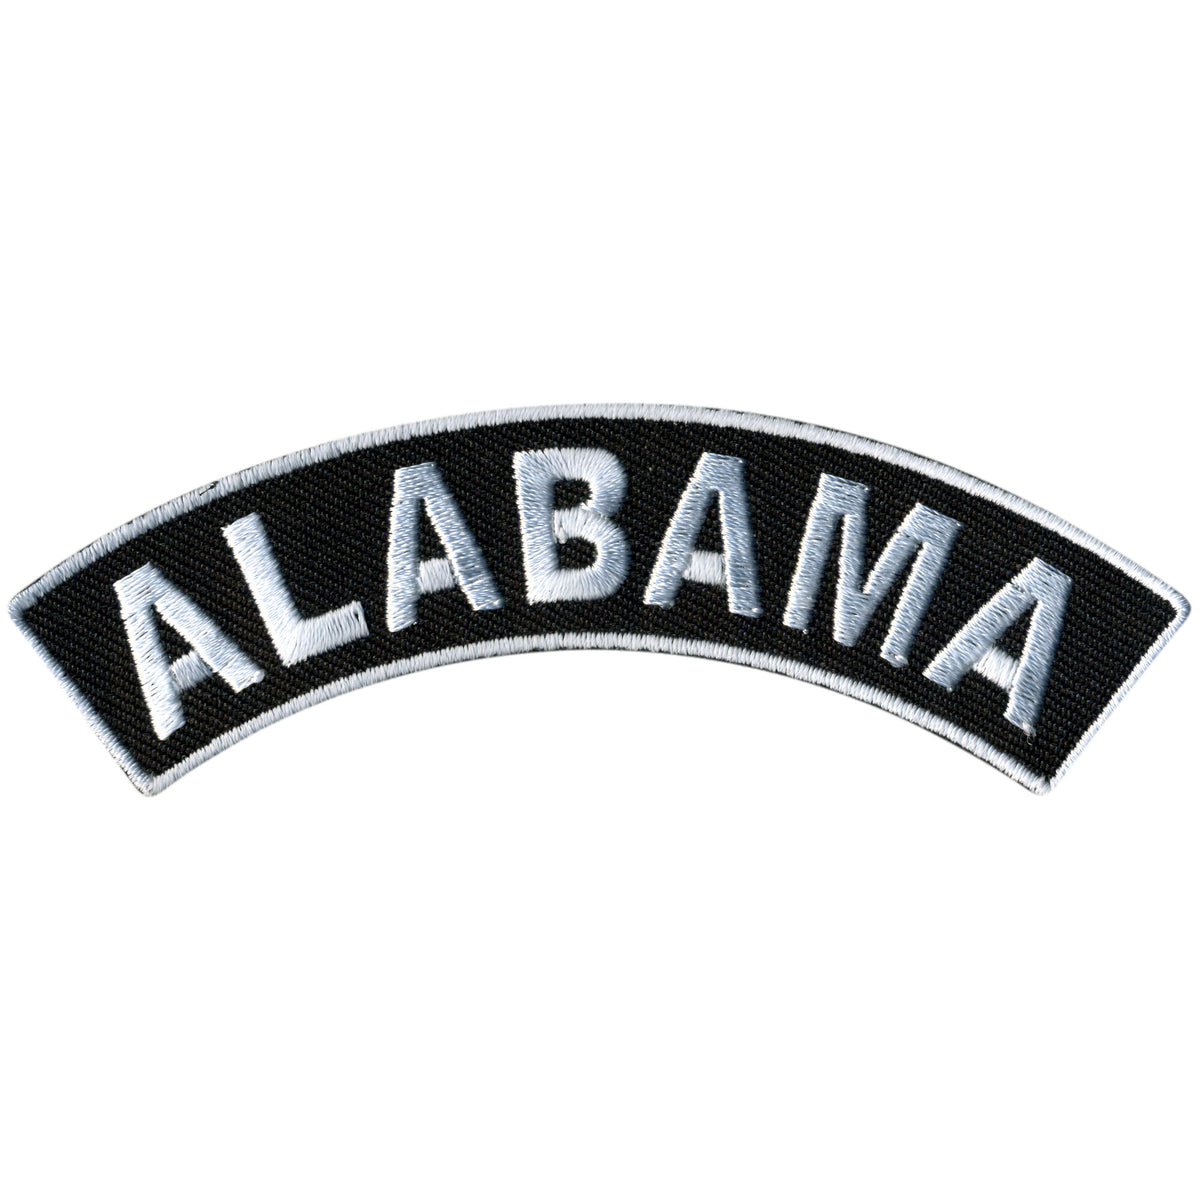 Hot Leathers Alabama 4” X 1” Top Rocker Patch